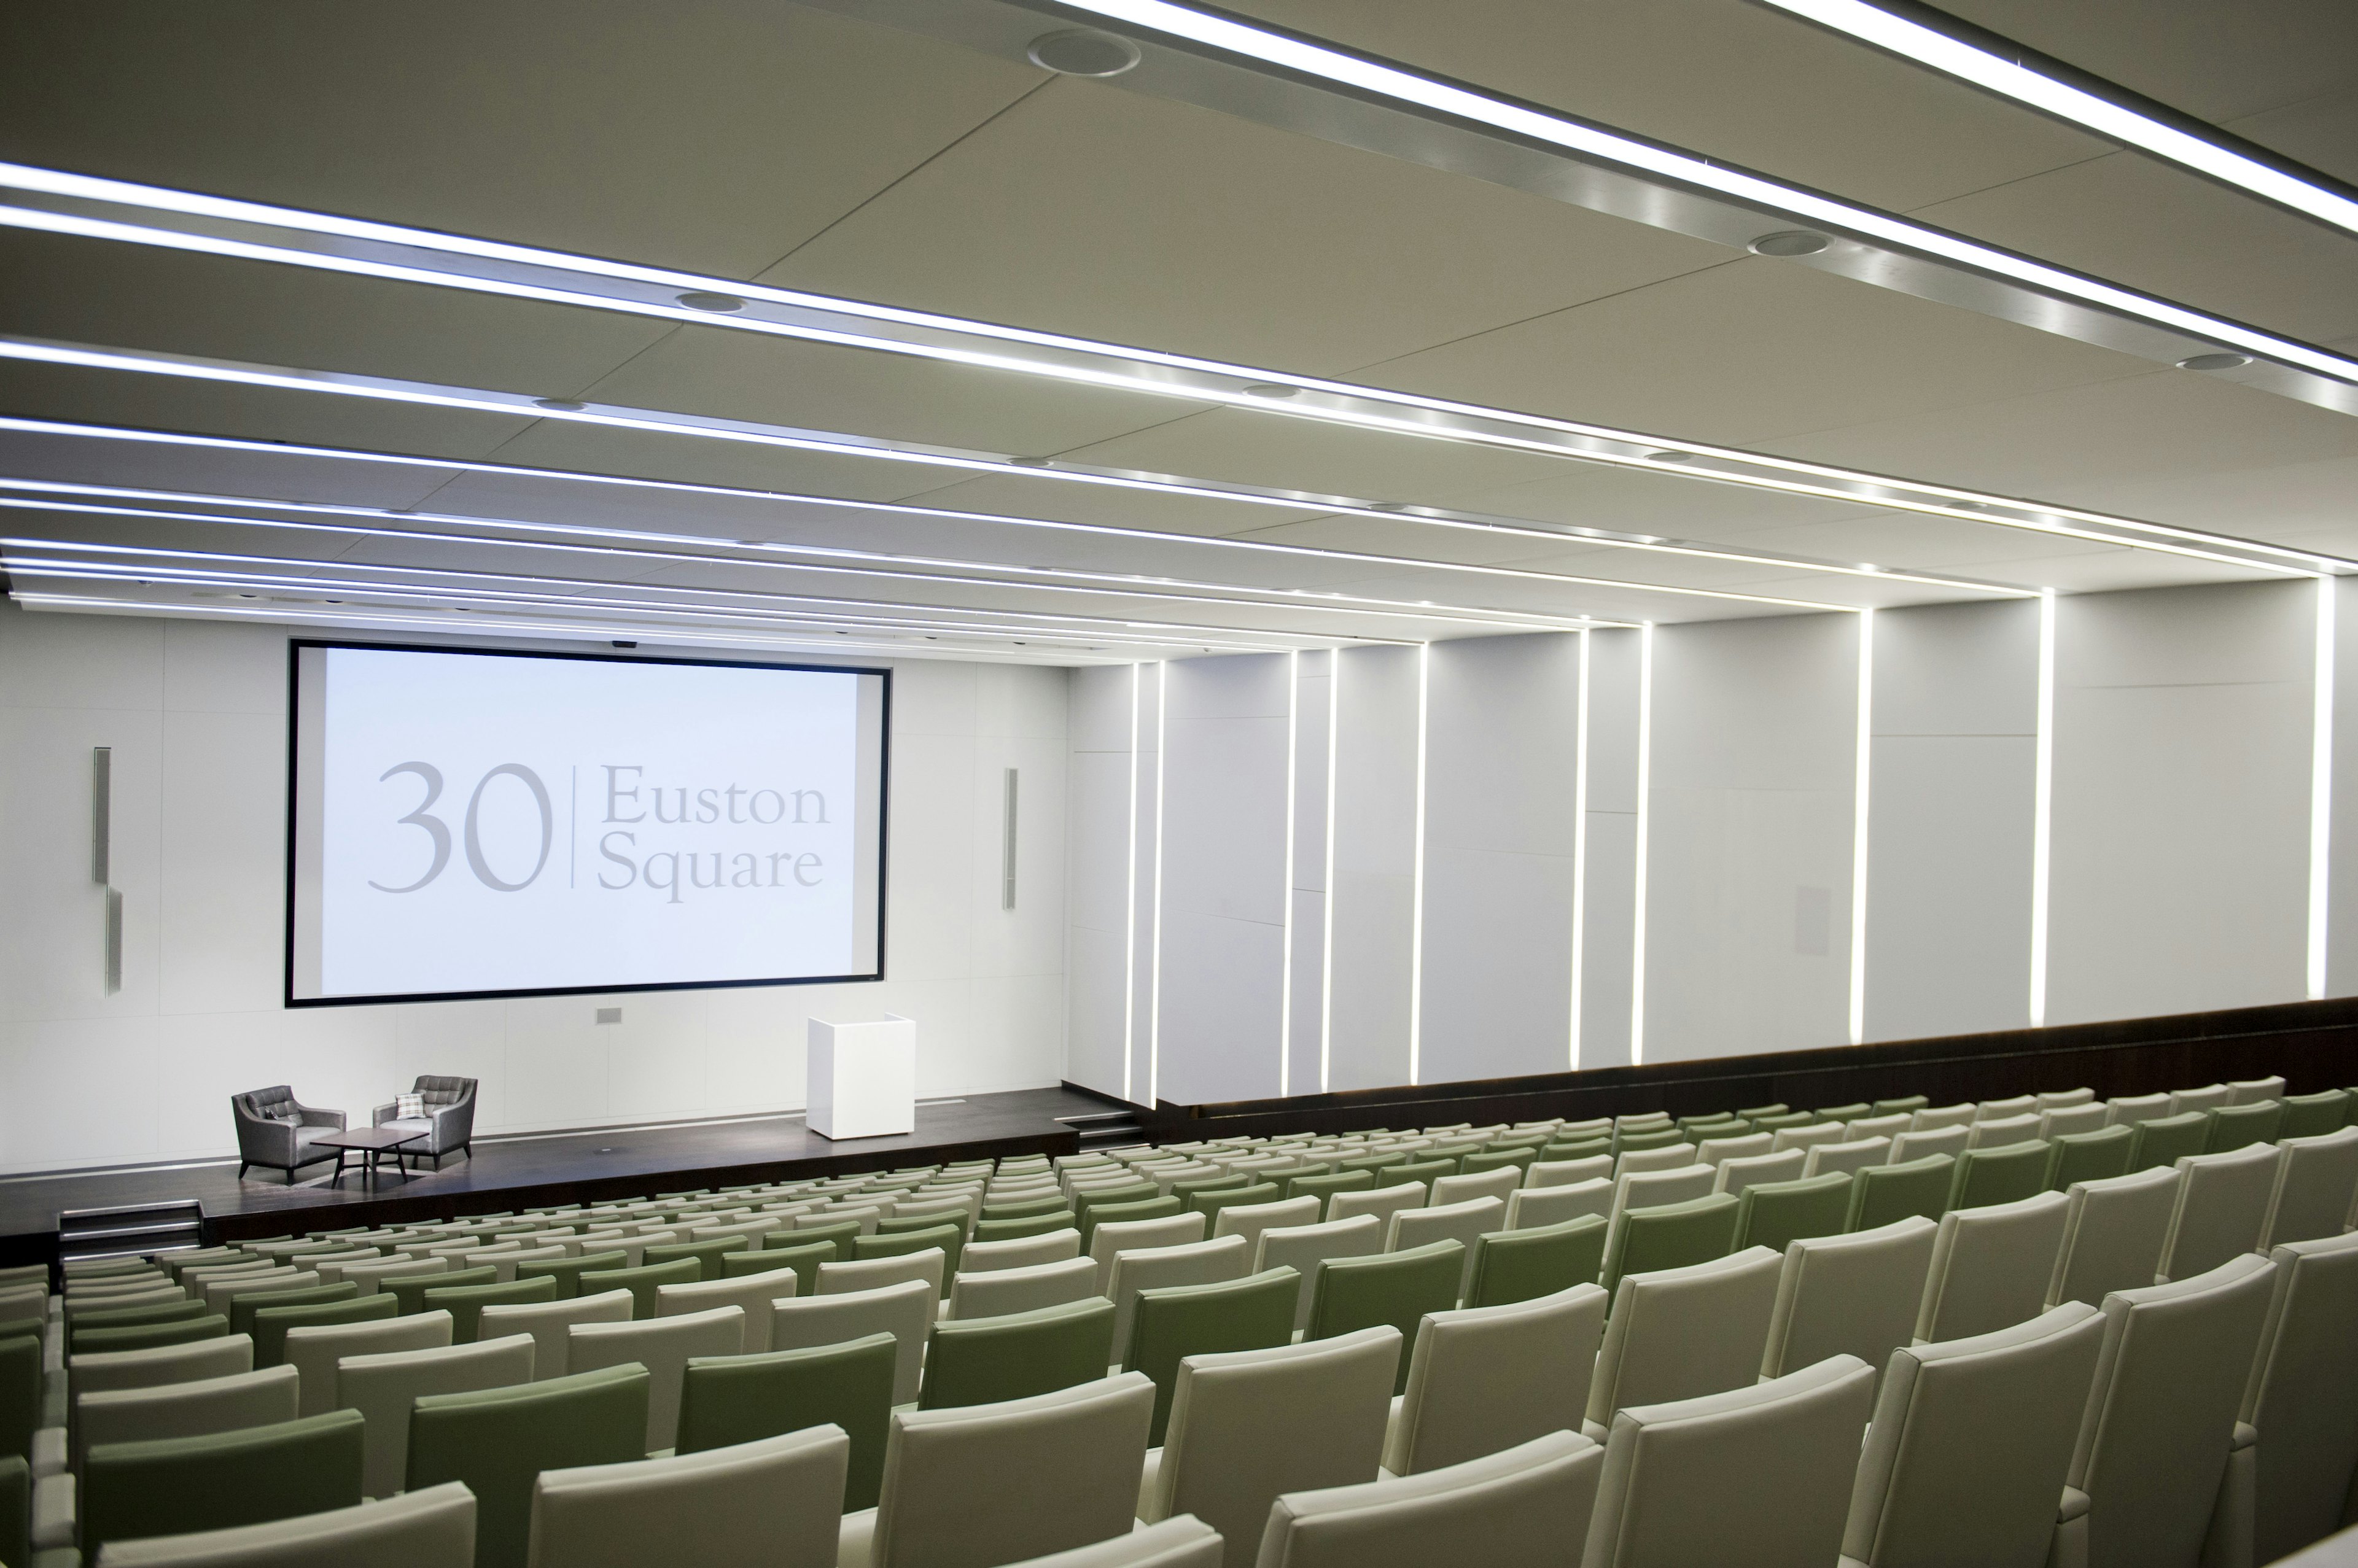 Seminar Rooms - 30 Euston Square - Business in Auditorium and Exhibition Space - Banner